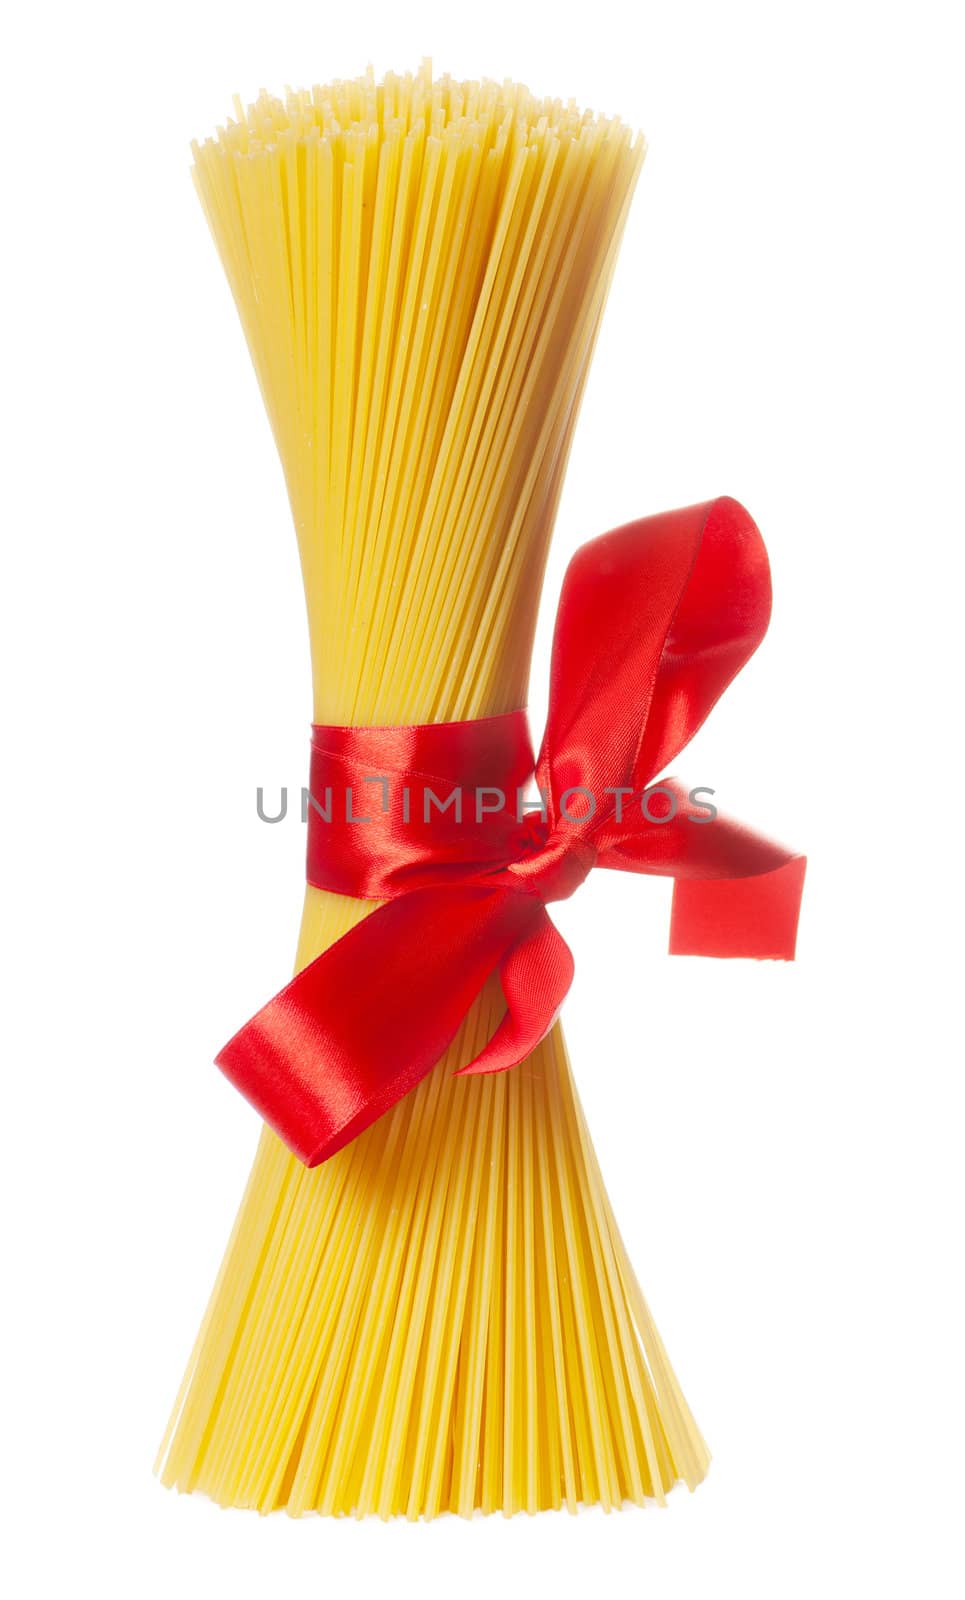 Bunch of spaghetti by AGorohov